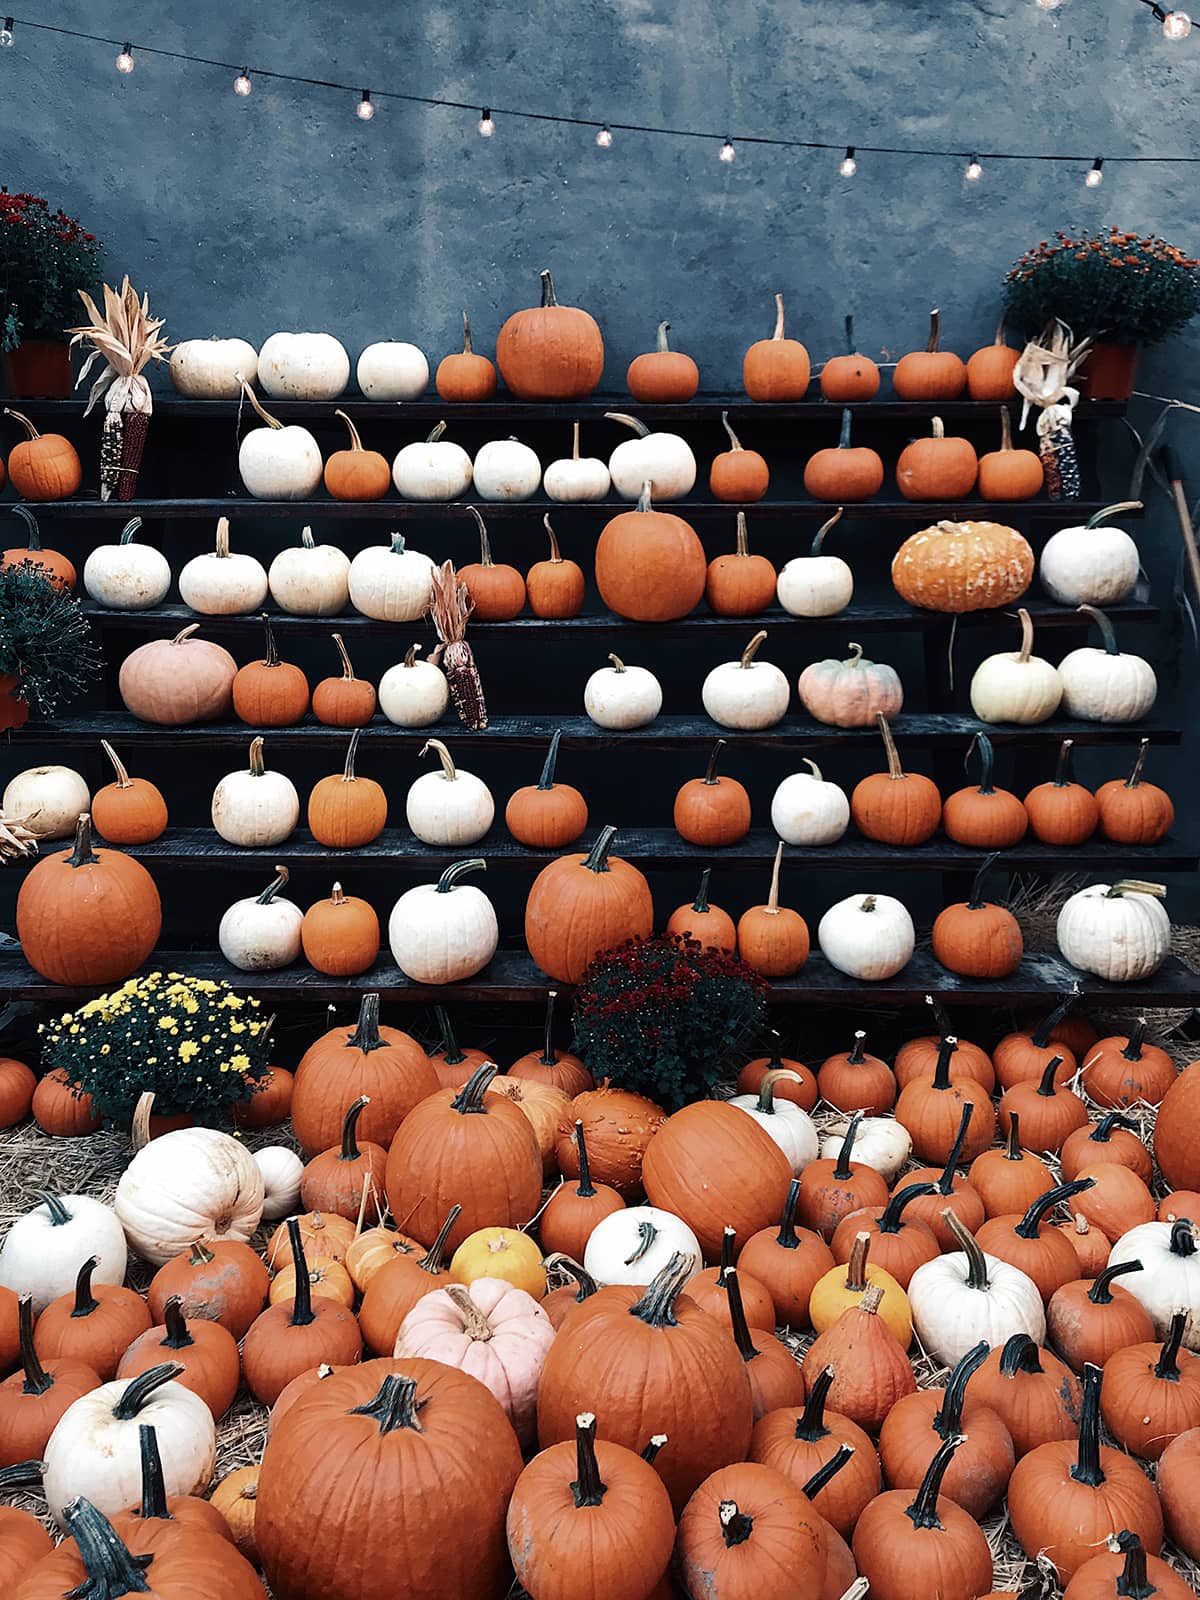 Fall Hashtags for Instagram - pumpkins